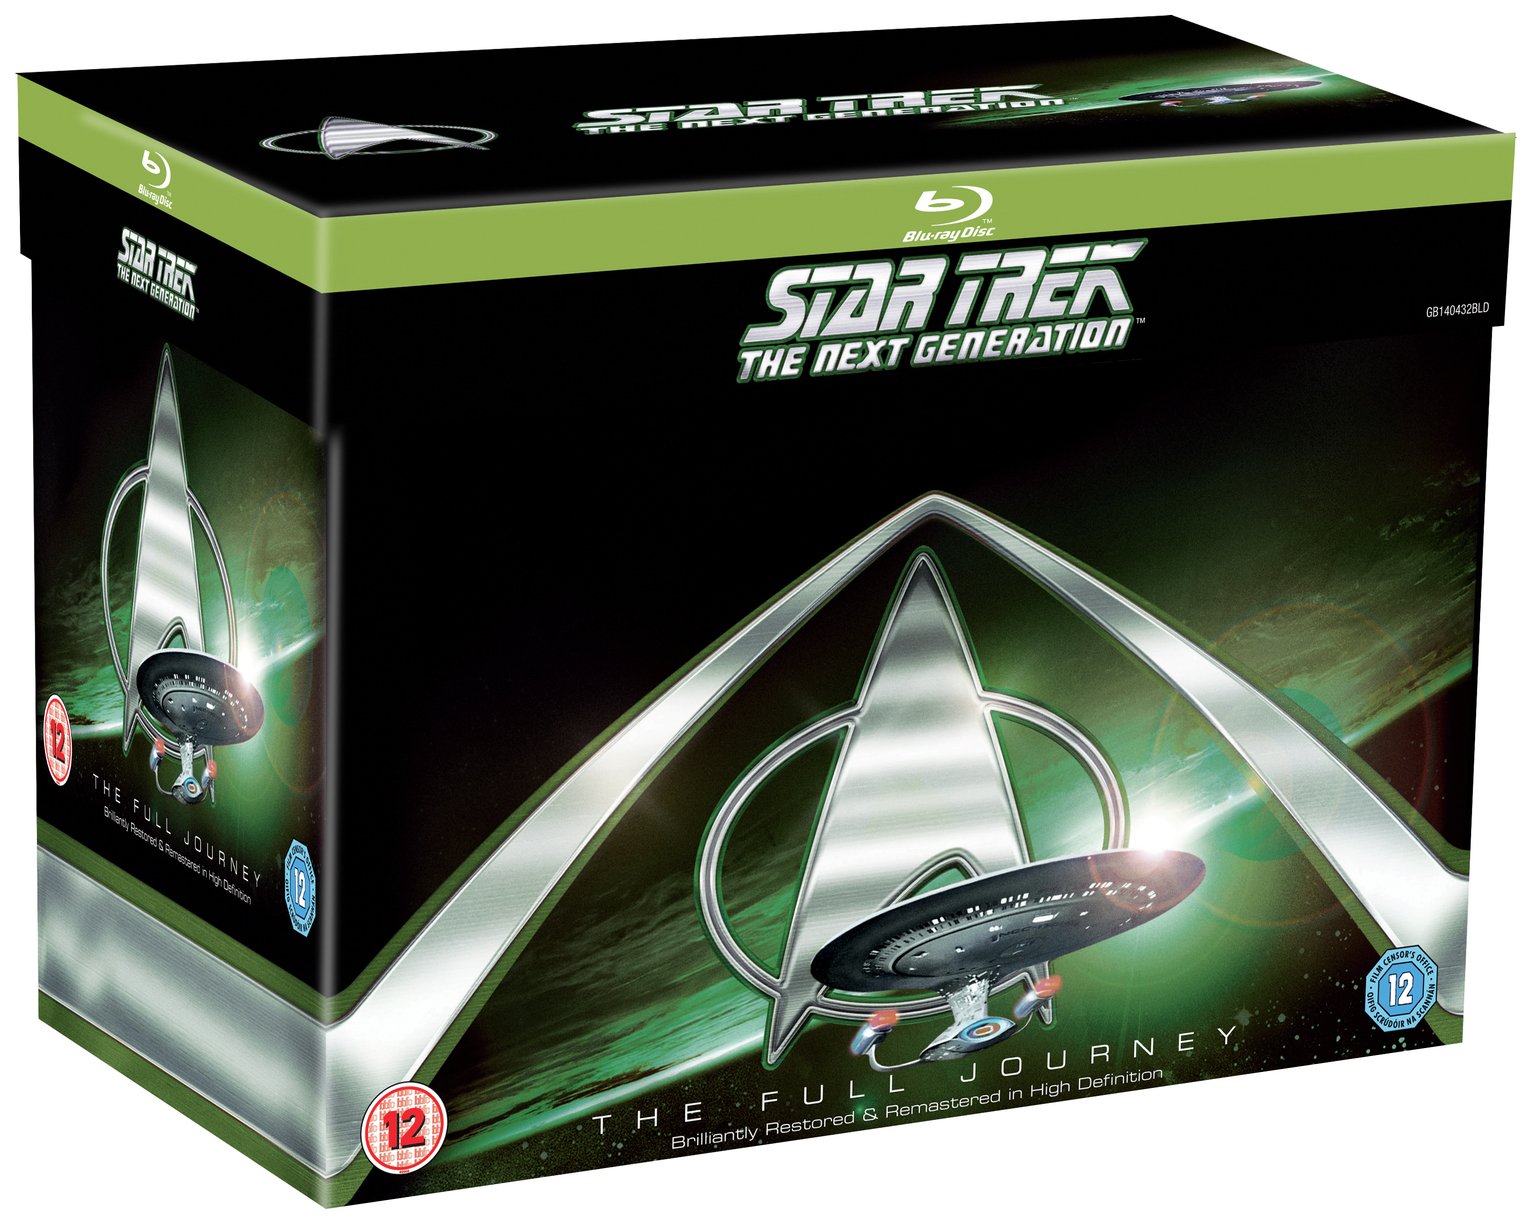 Star Trek: The Next Generation Season 1-7 Blu-Ray Box Set review